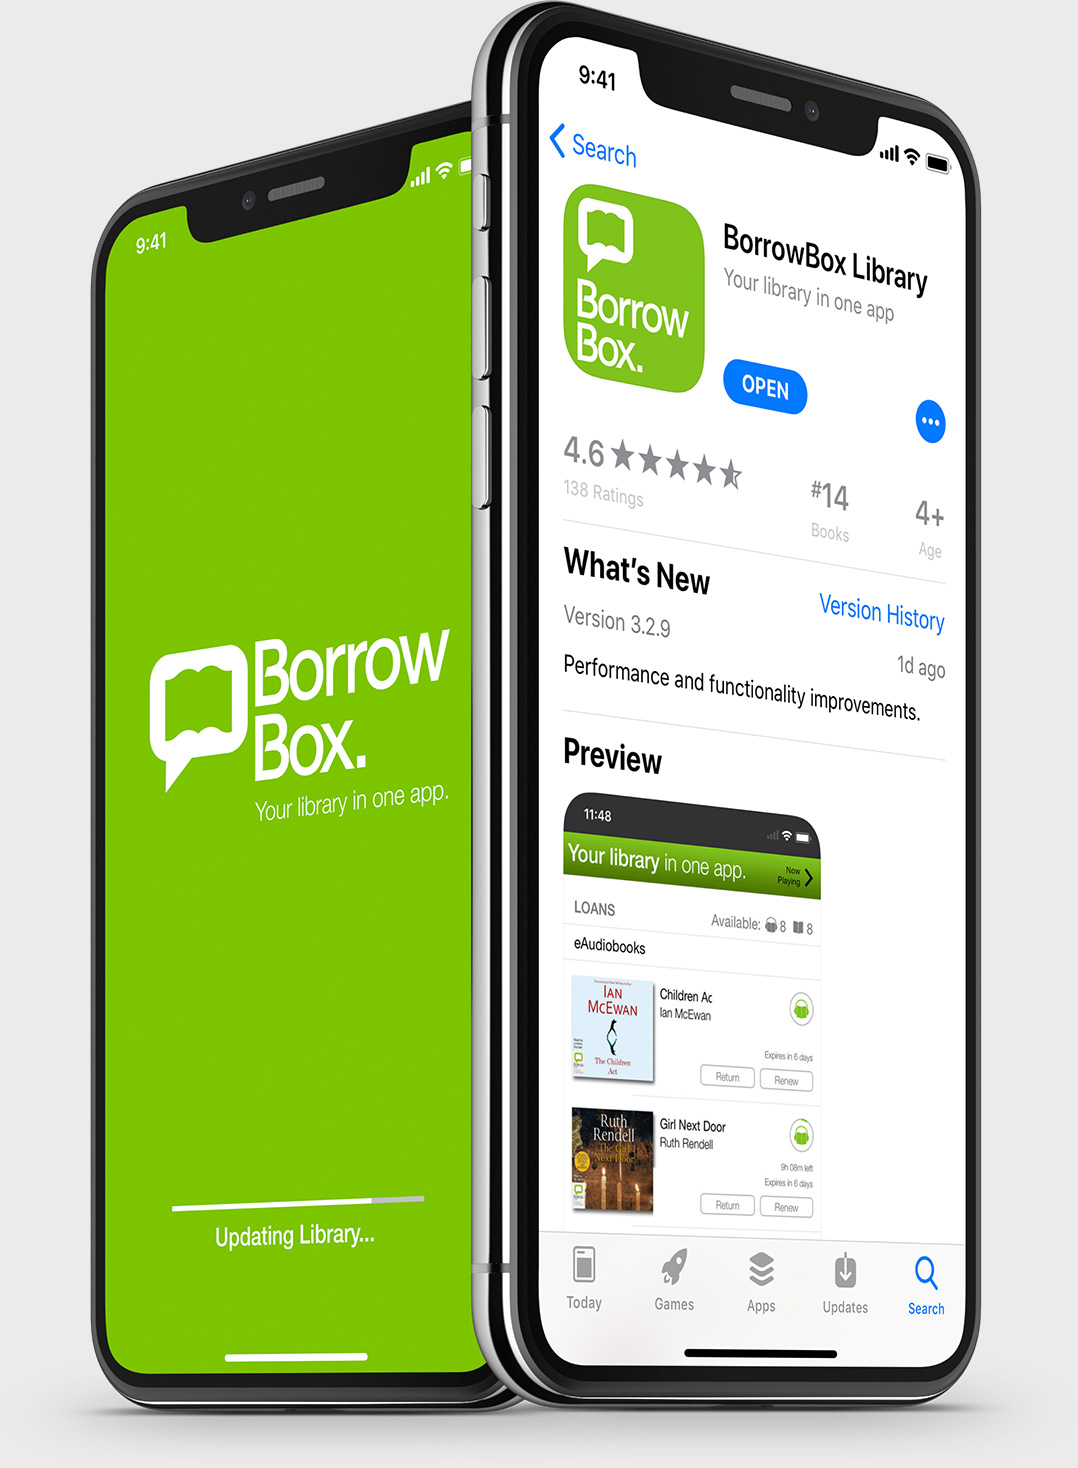 Borrowbox mobile app